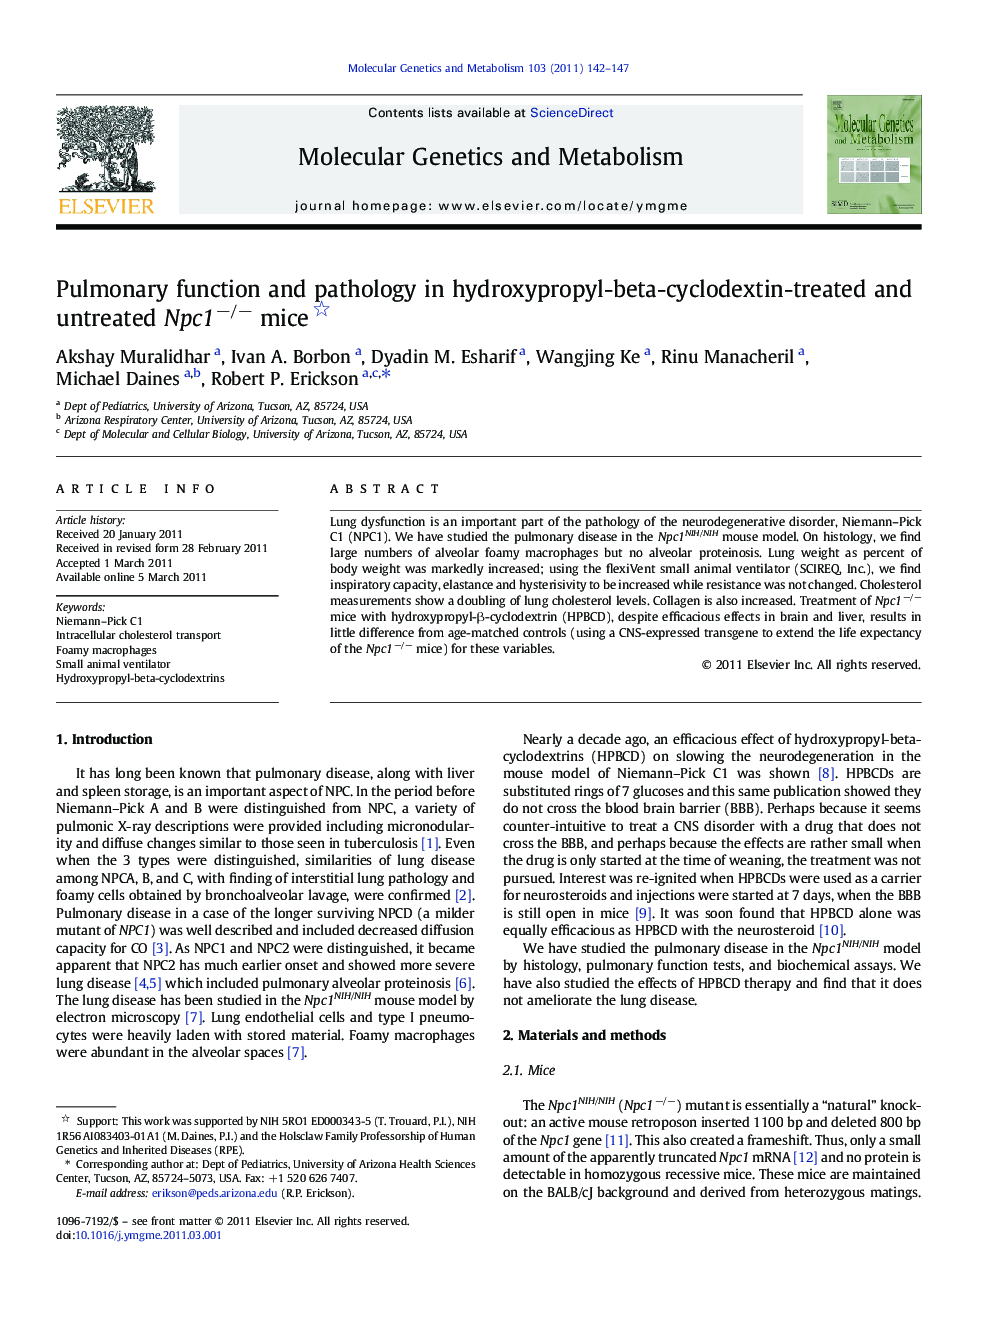 Pulmonary function and pathology in hydroxypropyl-beta-cyclodextin-treated and untreated Npc1−/− mice 